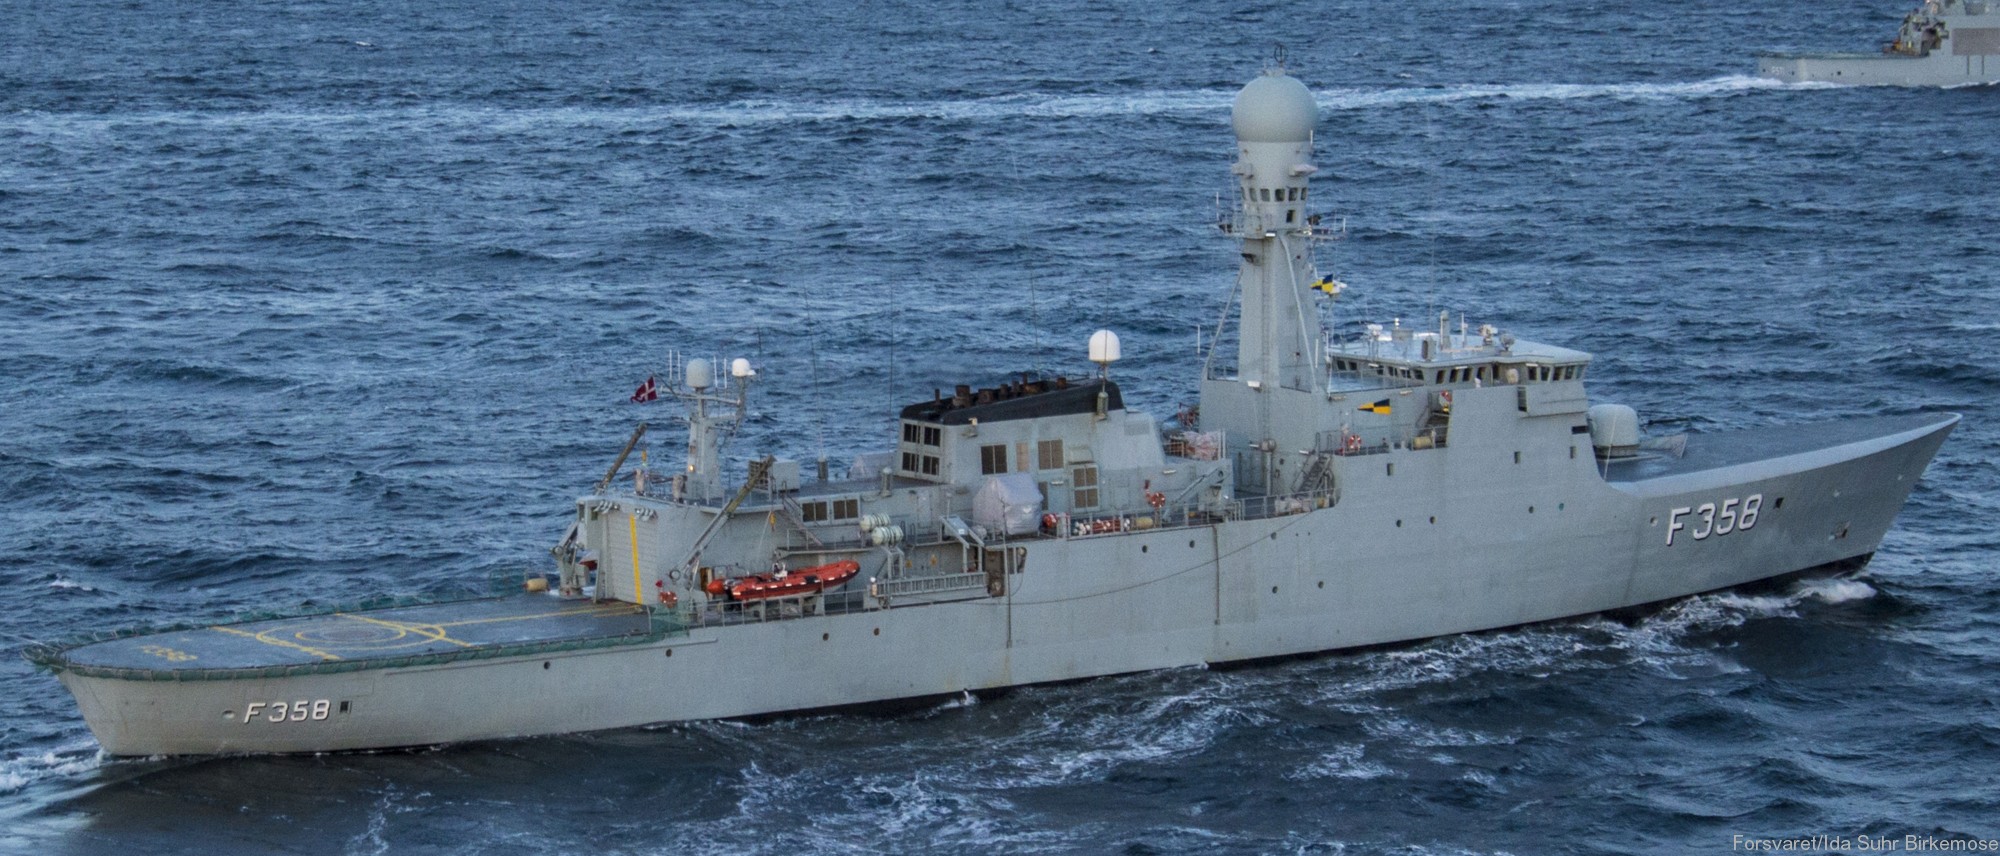 f-358 hdms triton thetis class ocean patrol frigate royal danish navy kongelige danske marine kdm inspektionsskibet 41